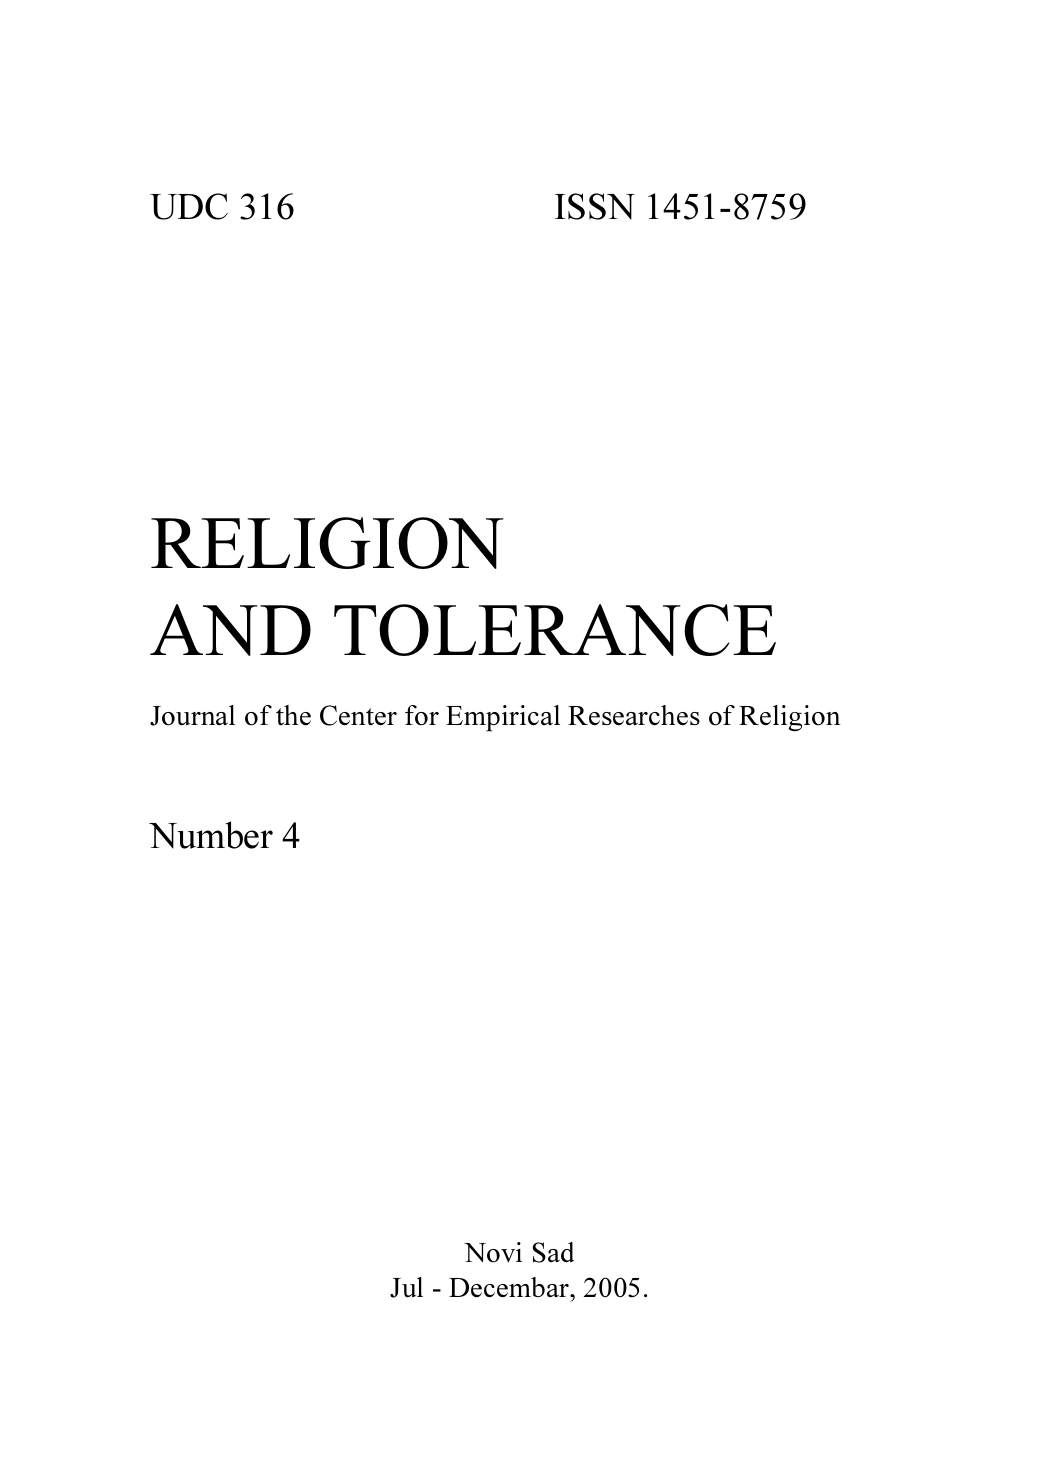 RELIGIOUS TOLERANCE IN ISLAMIC SPAIN Cover Image